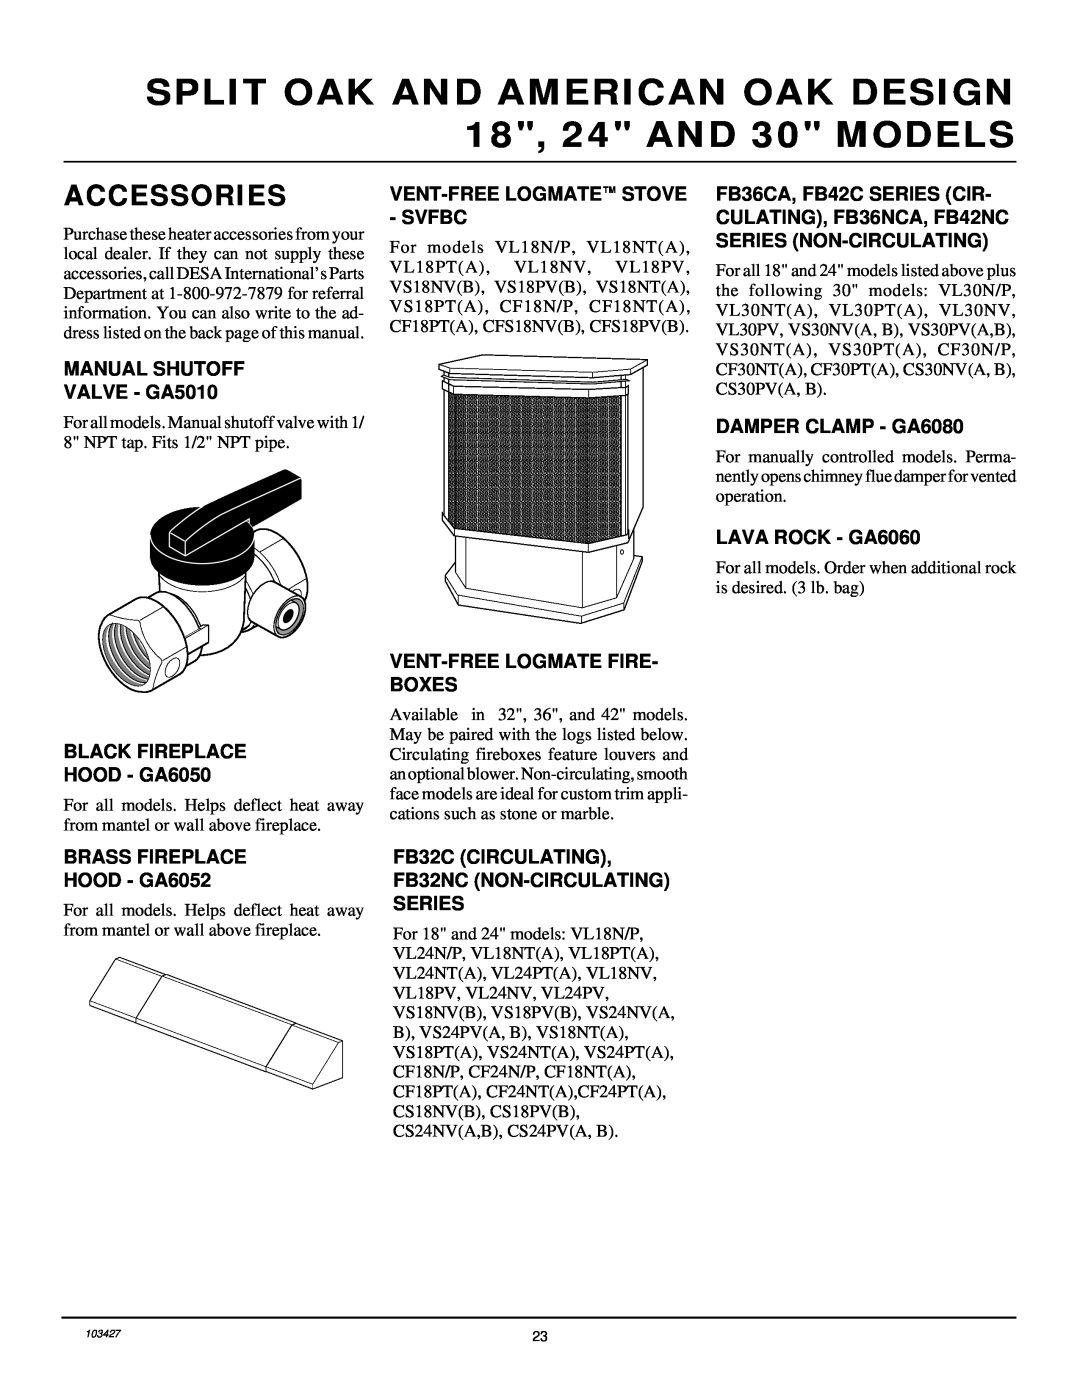 Desa Unvented Propane Gas Log Heater Model Split Oak and American Oak Design Accessories, MANUAL SHUTOFF VALVE - GA5010 